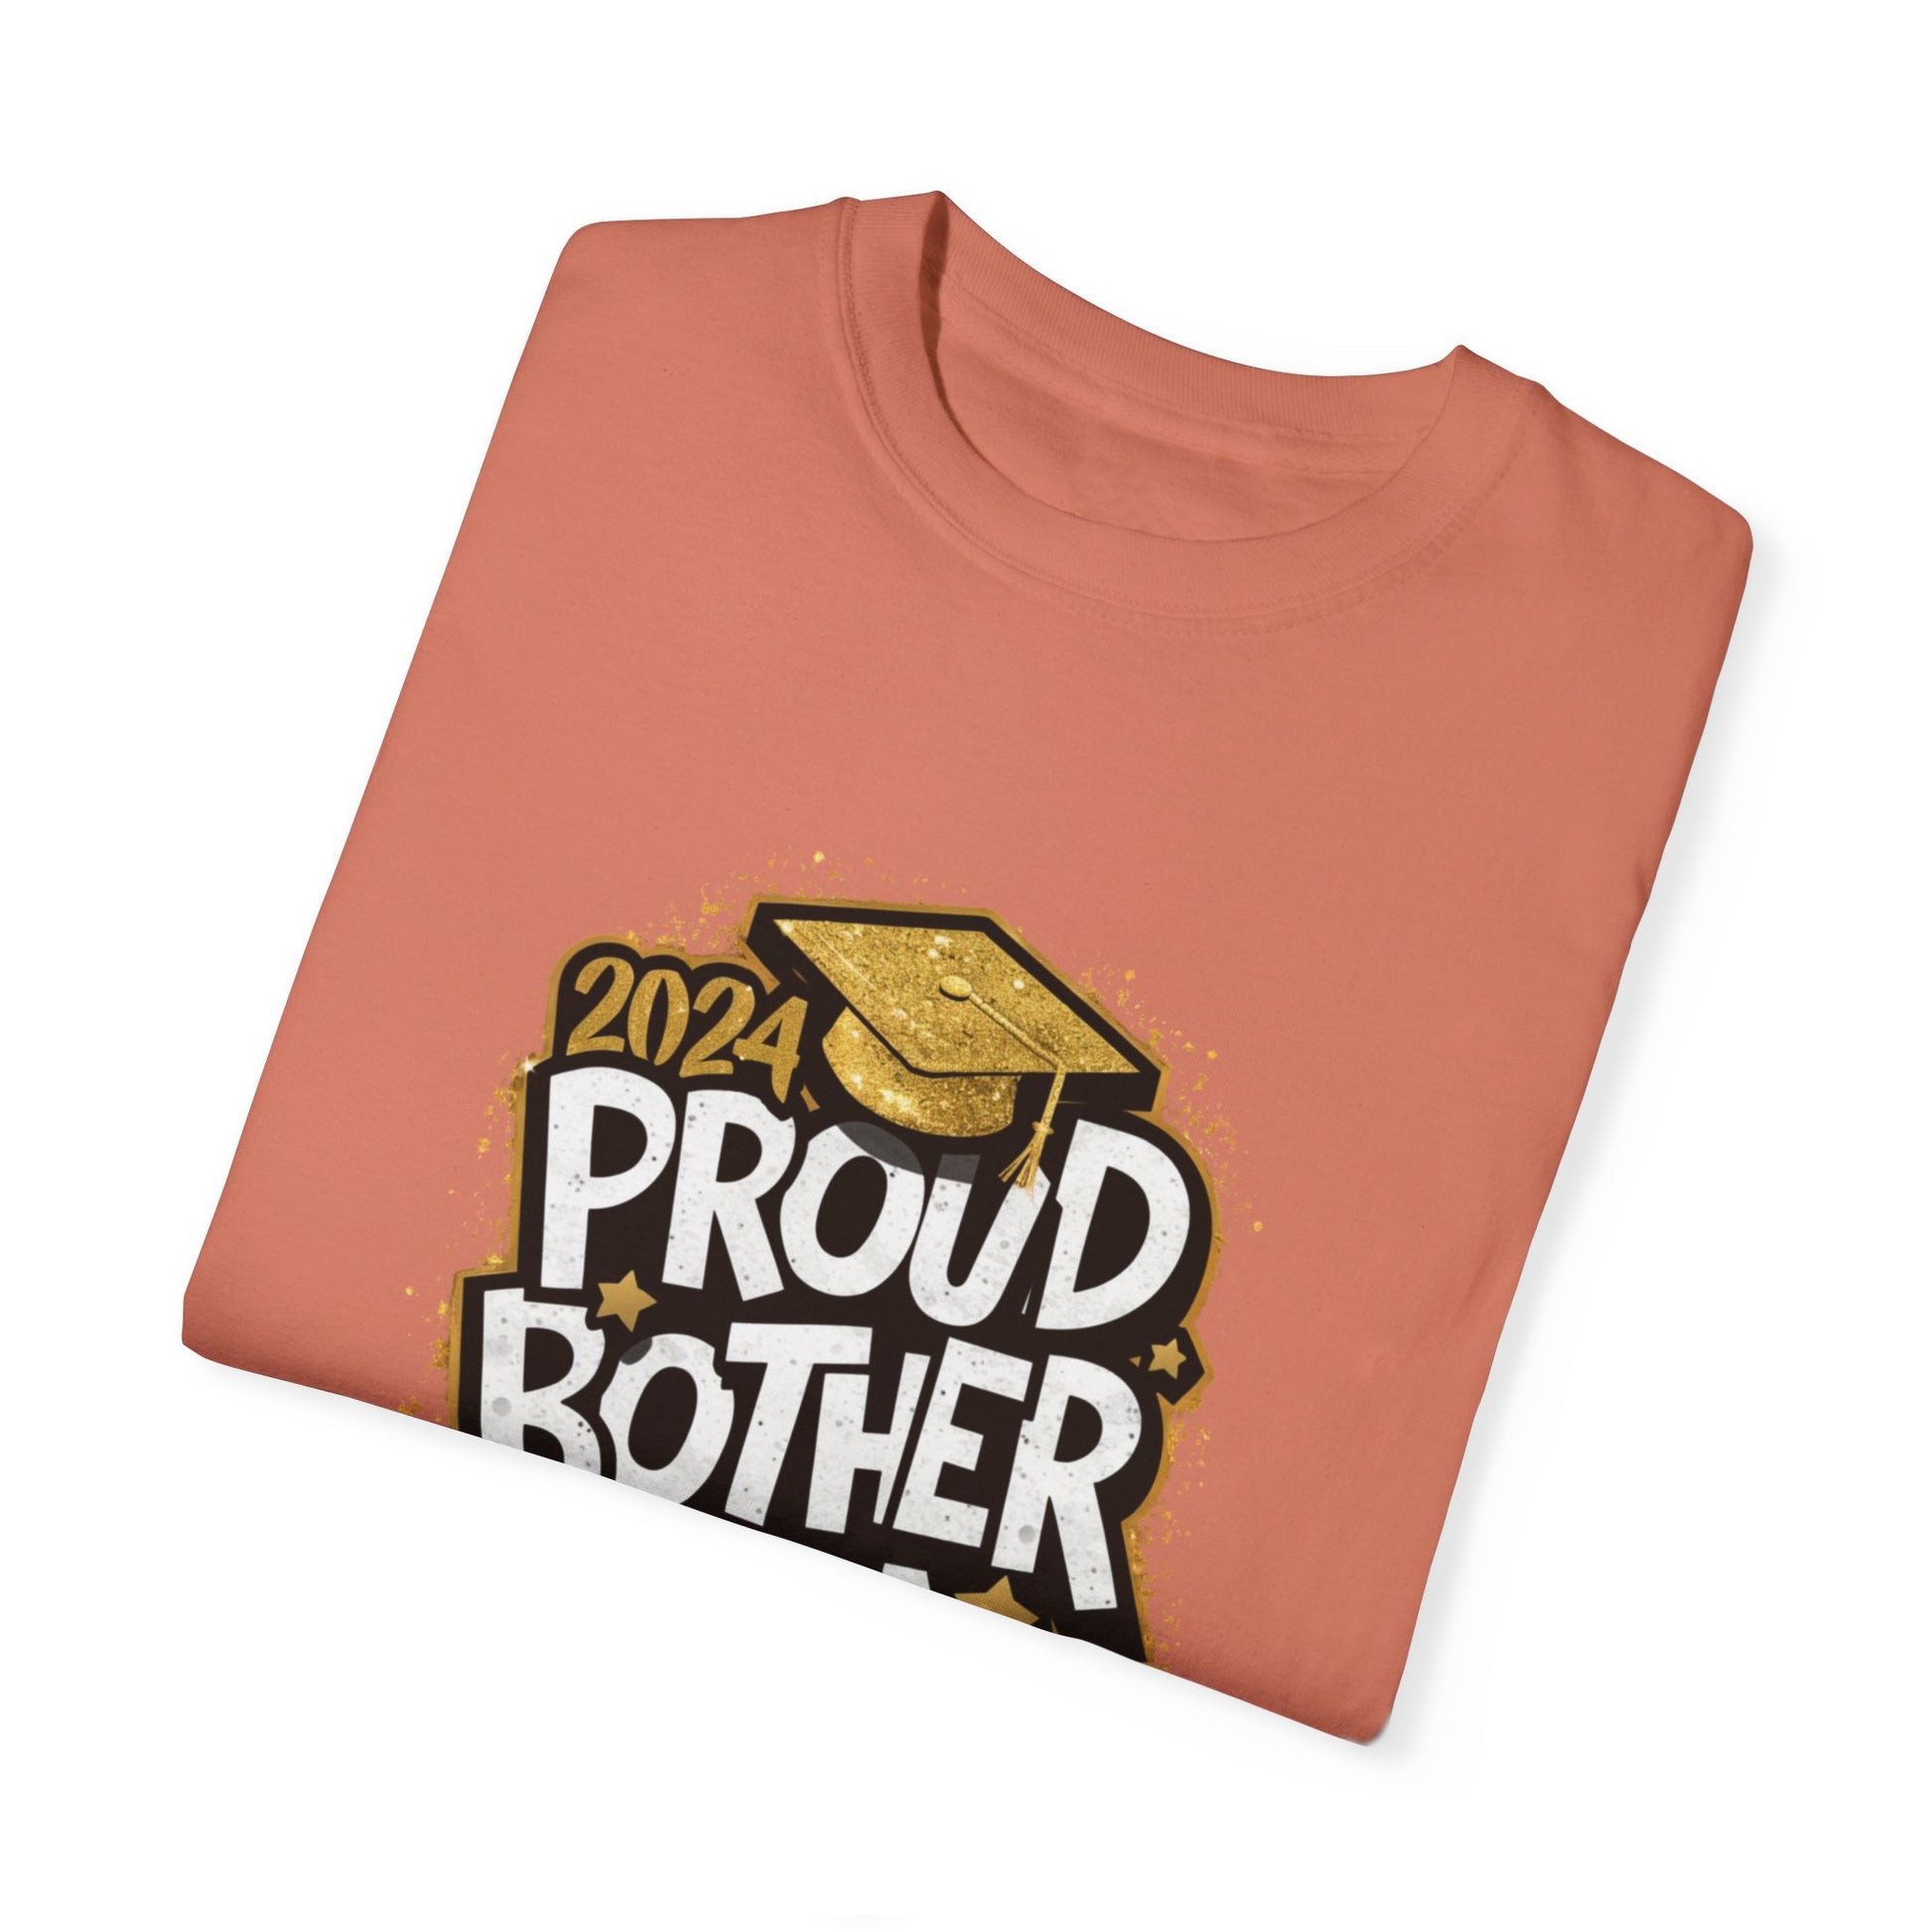 Proud Brother of a 2024 Graduate Unisex Garment-dyed T-shirt Cotton Funny Humorous Graphic Soft Premium Unisex Men Women Terracotta T-shirt Birthday Gift-56